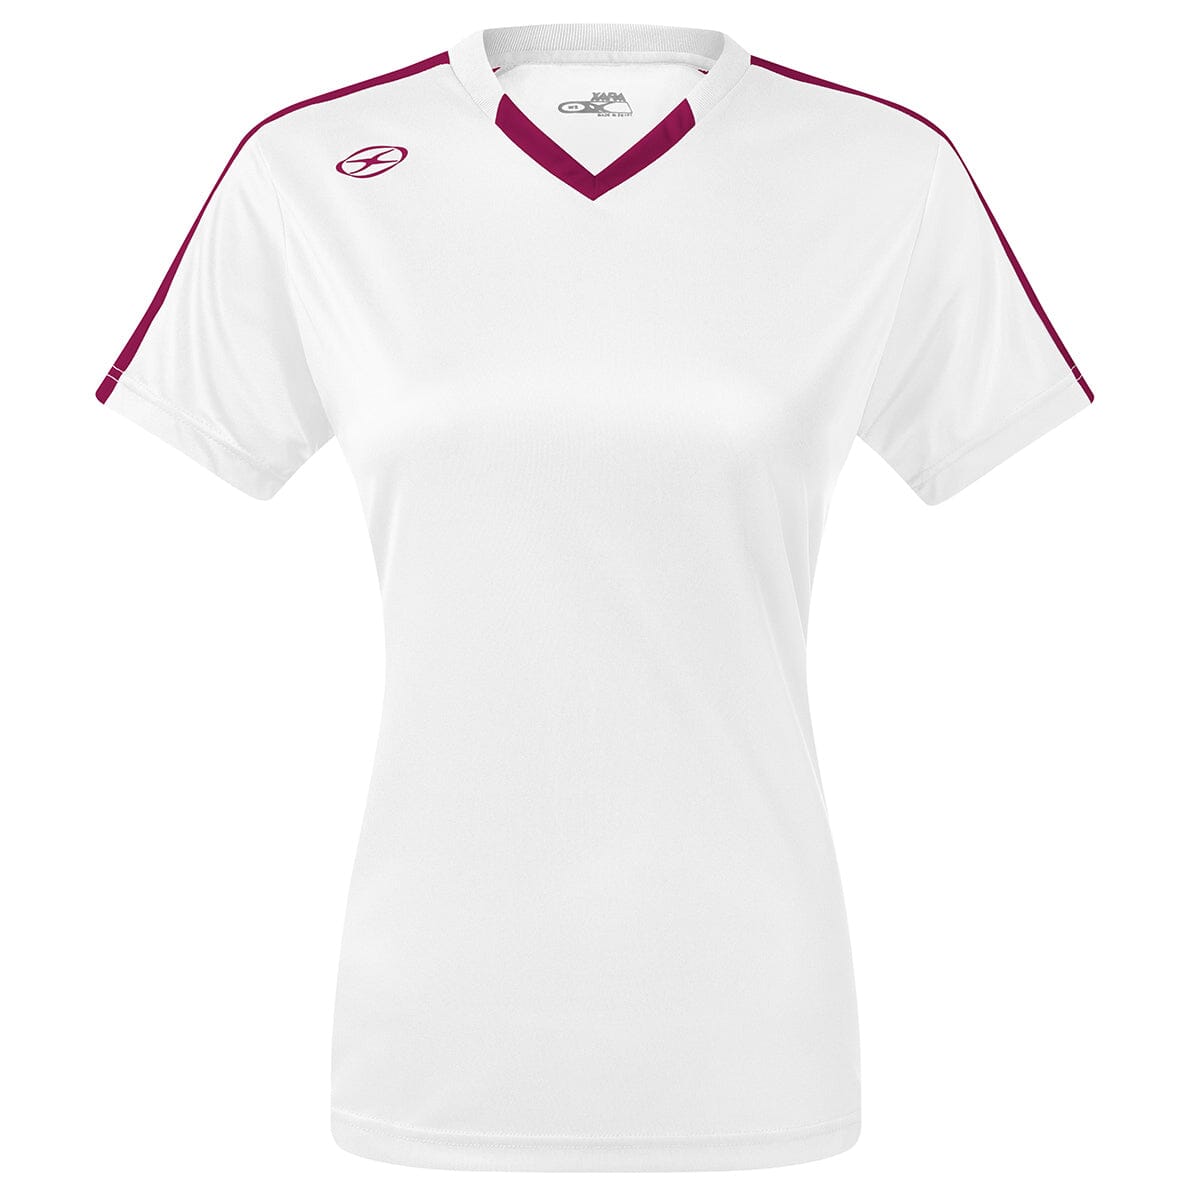 Britannia Jersey - Away Colors - Female Shirt Xara Soccer White/Maroon Womens Youth Large 